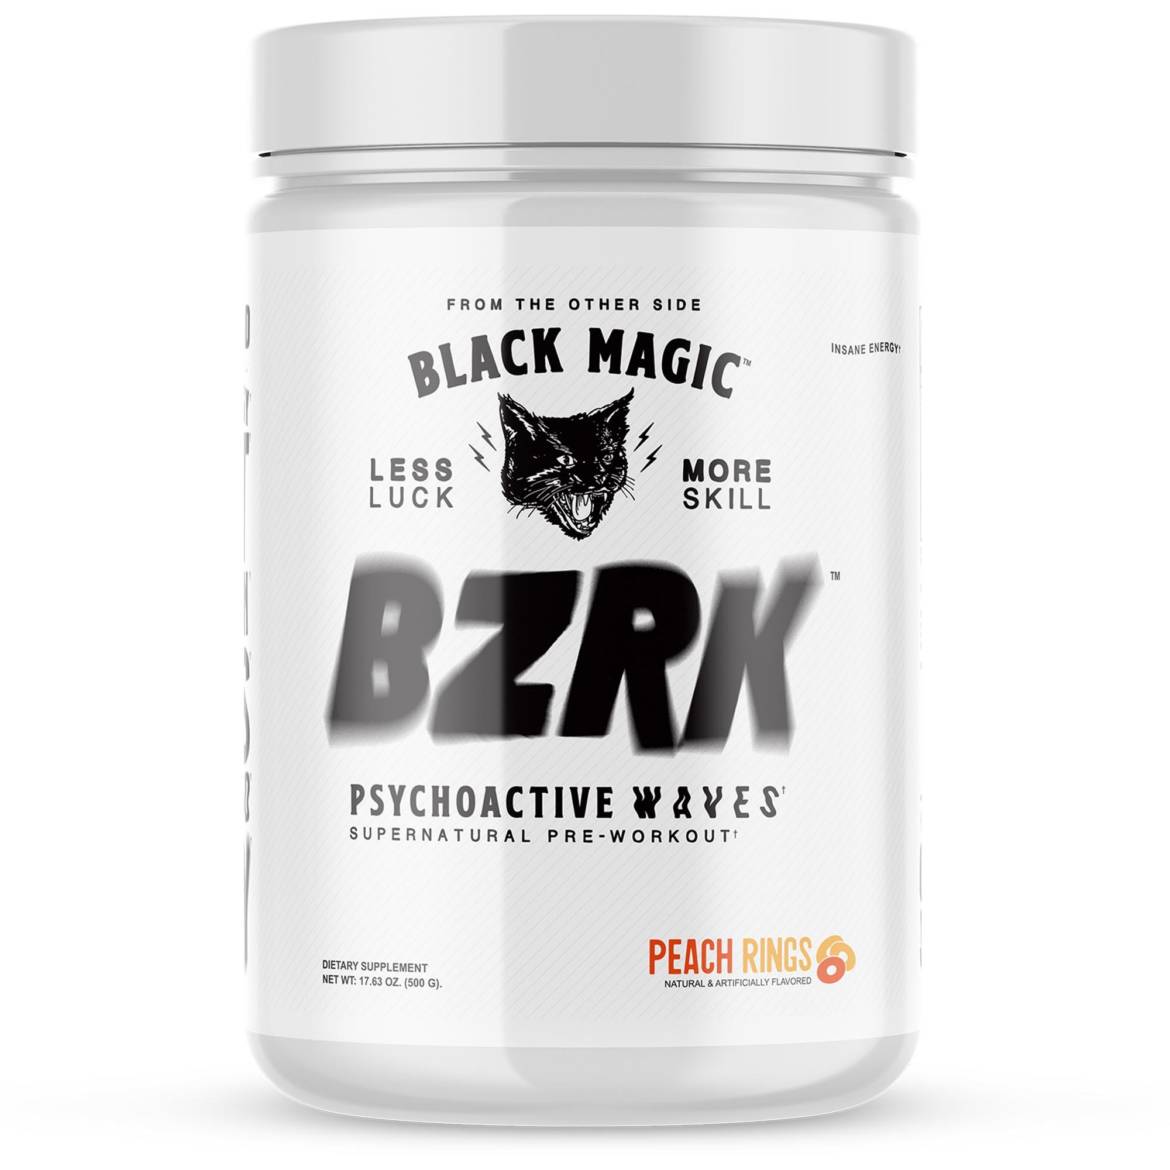 Black_Magic_Product_Renders-BZRK-Peach-Front_2000x.jpg